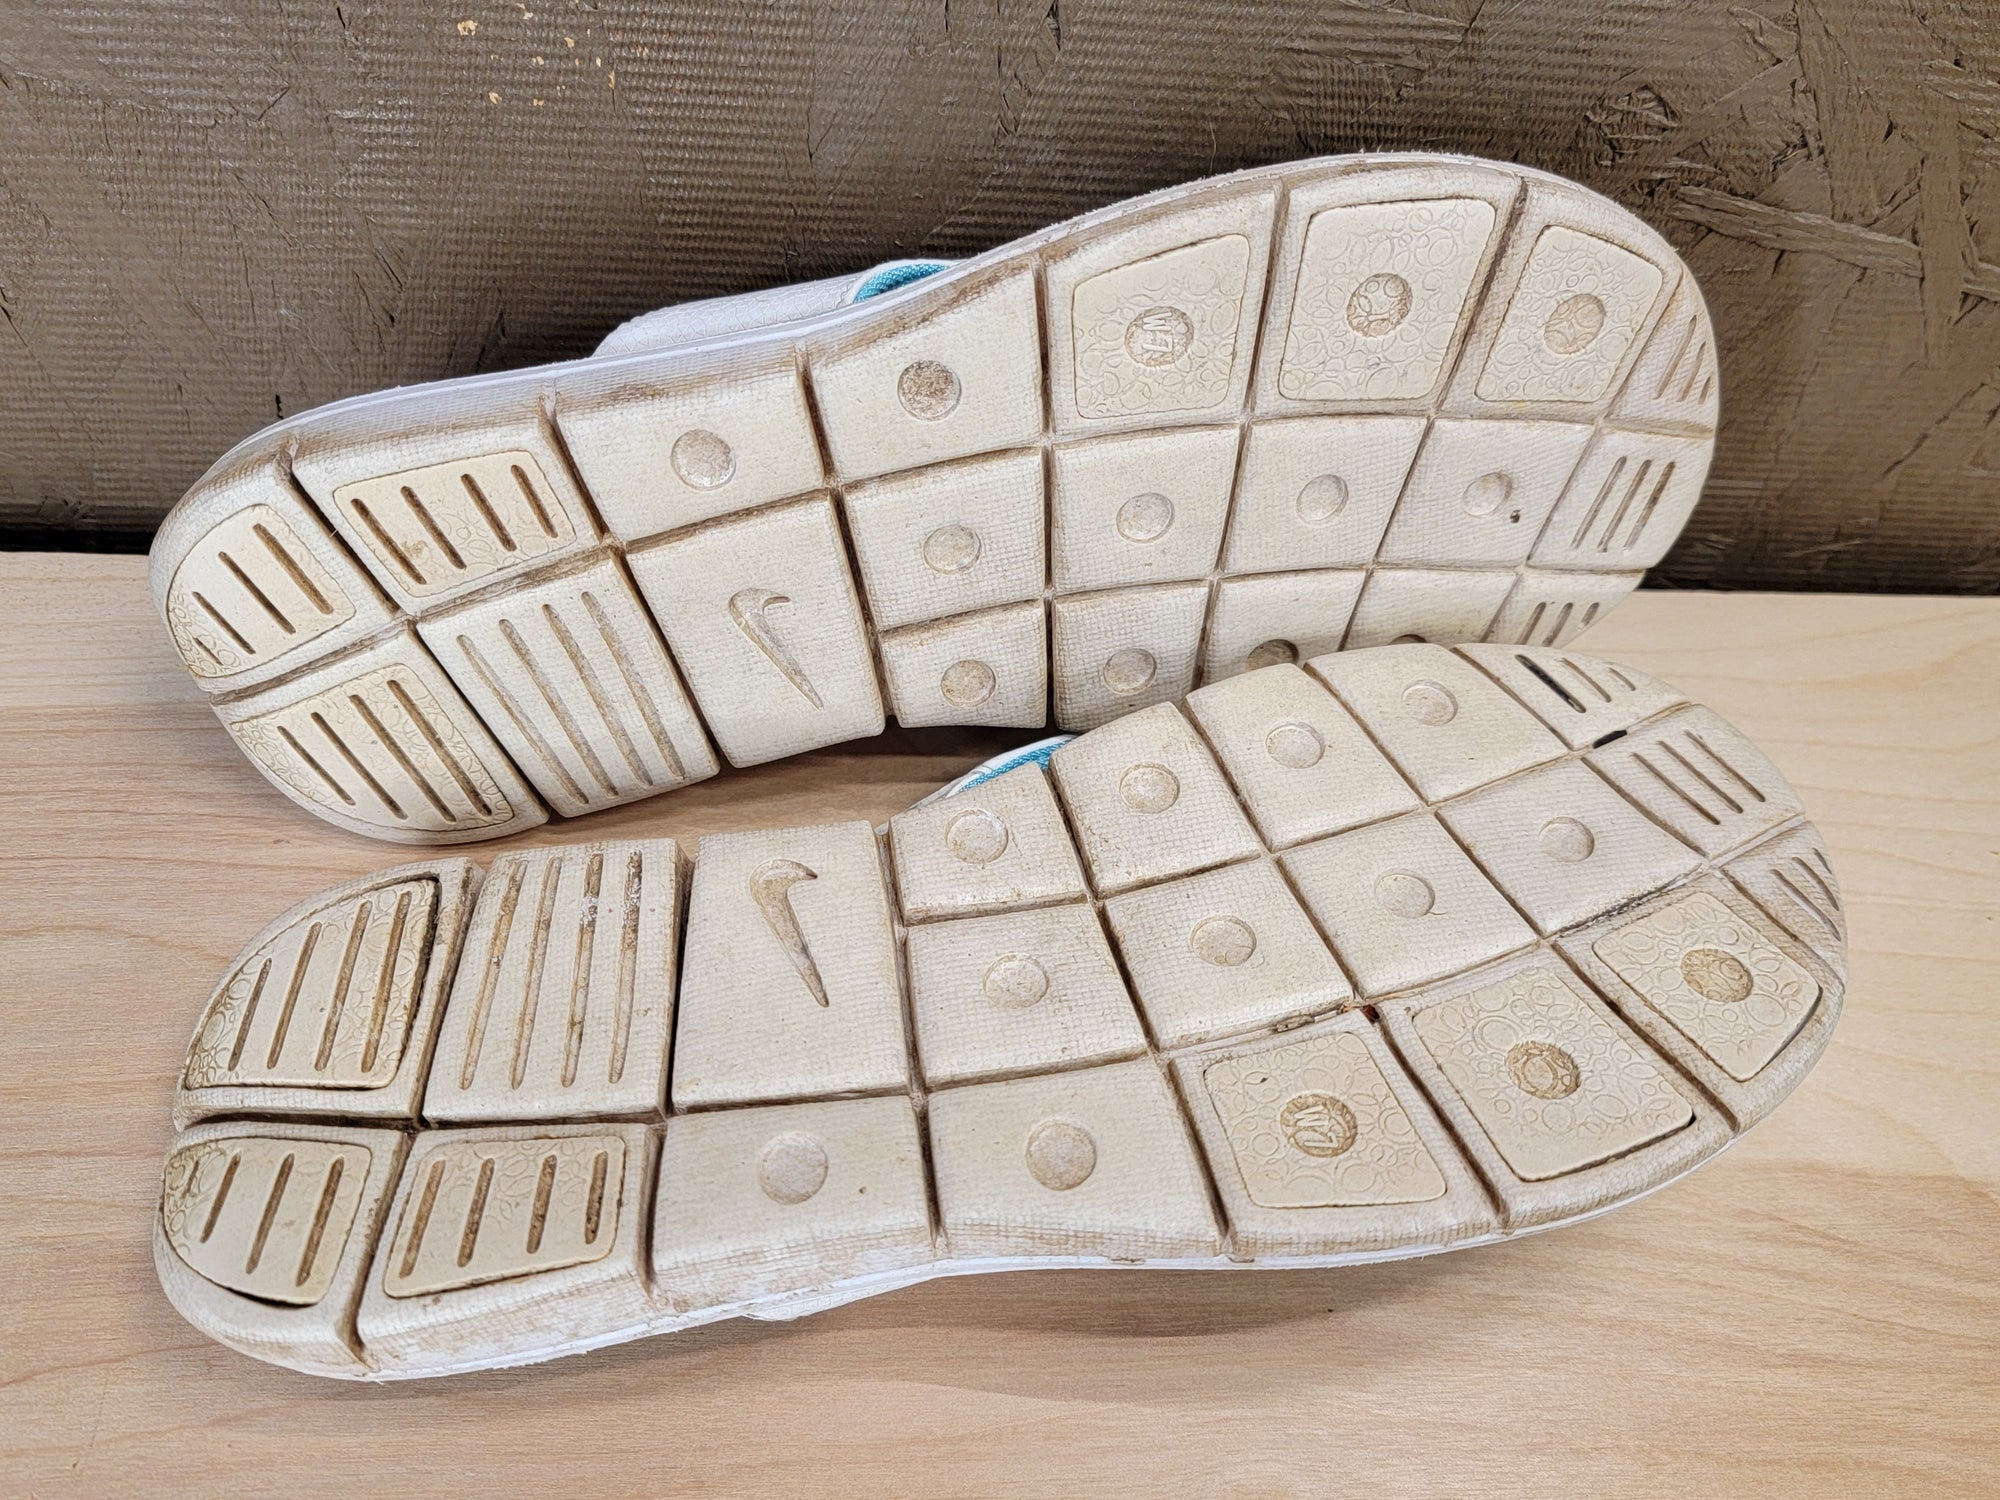 White & Blue Nike Sandals (7)